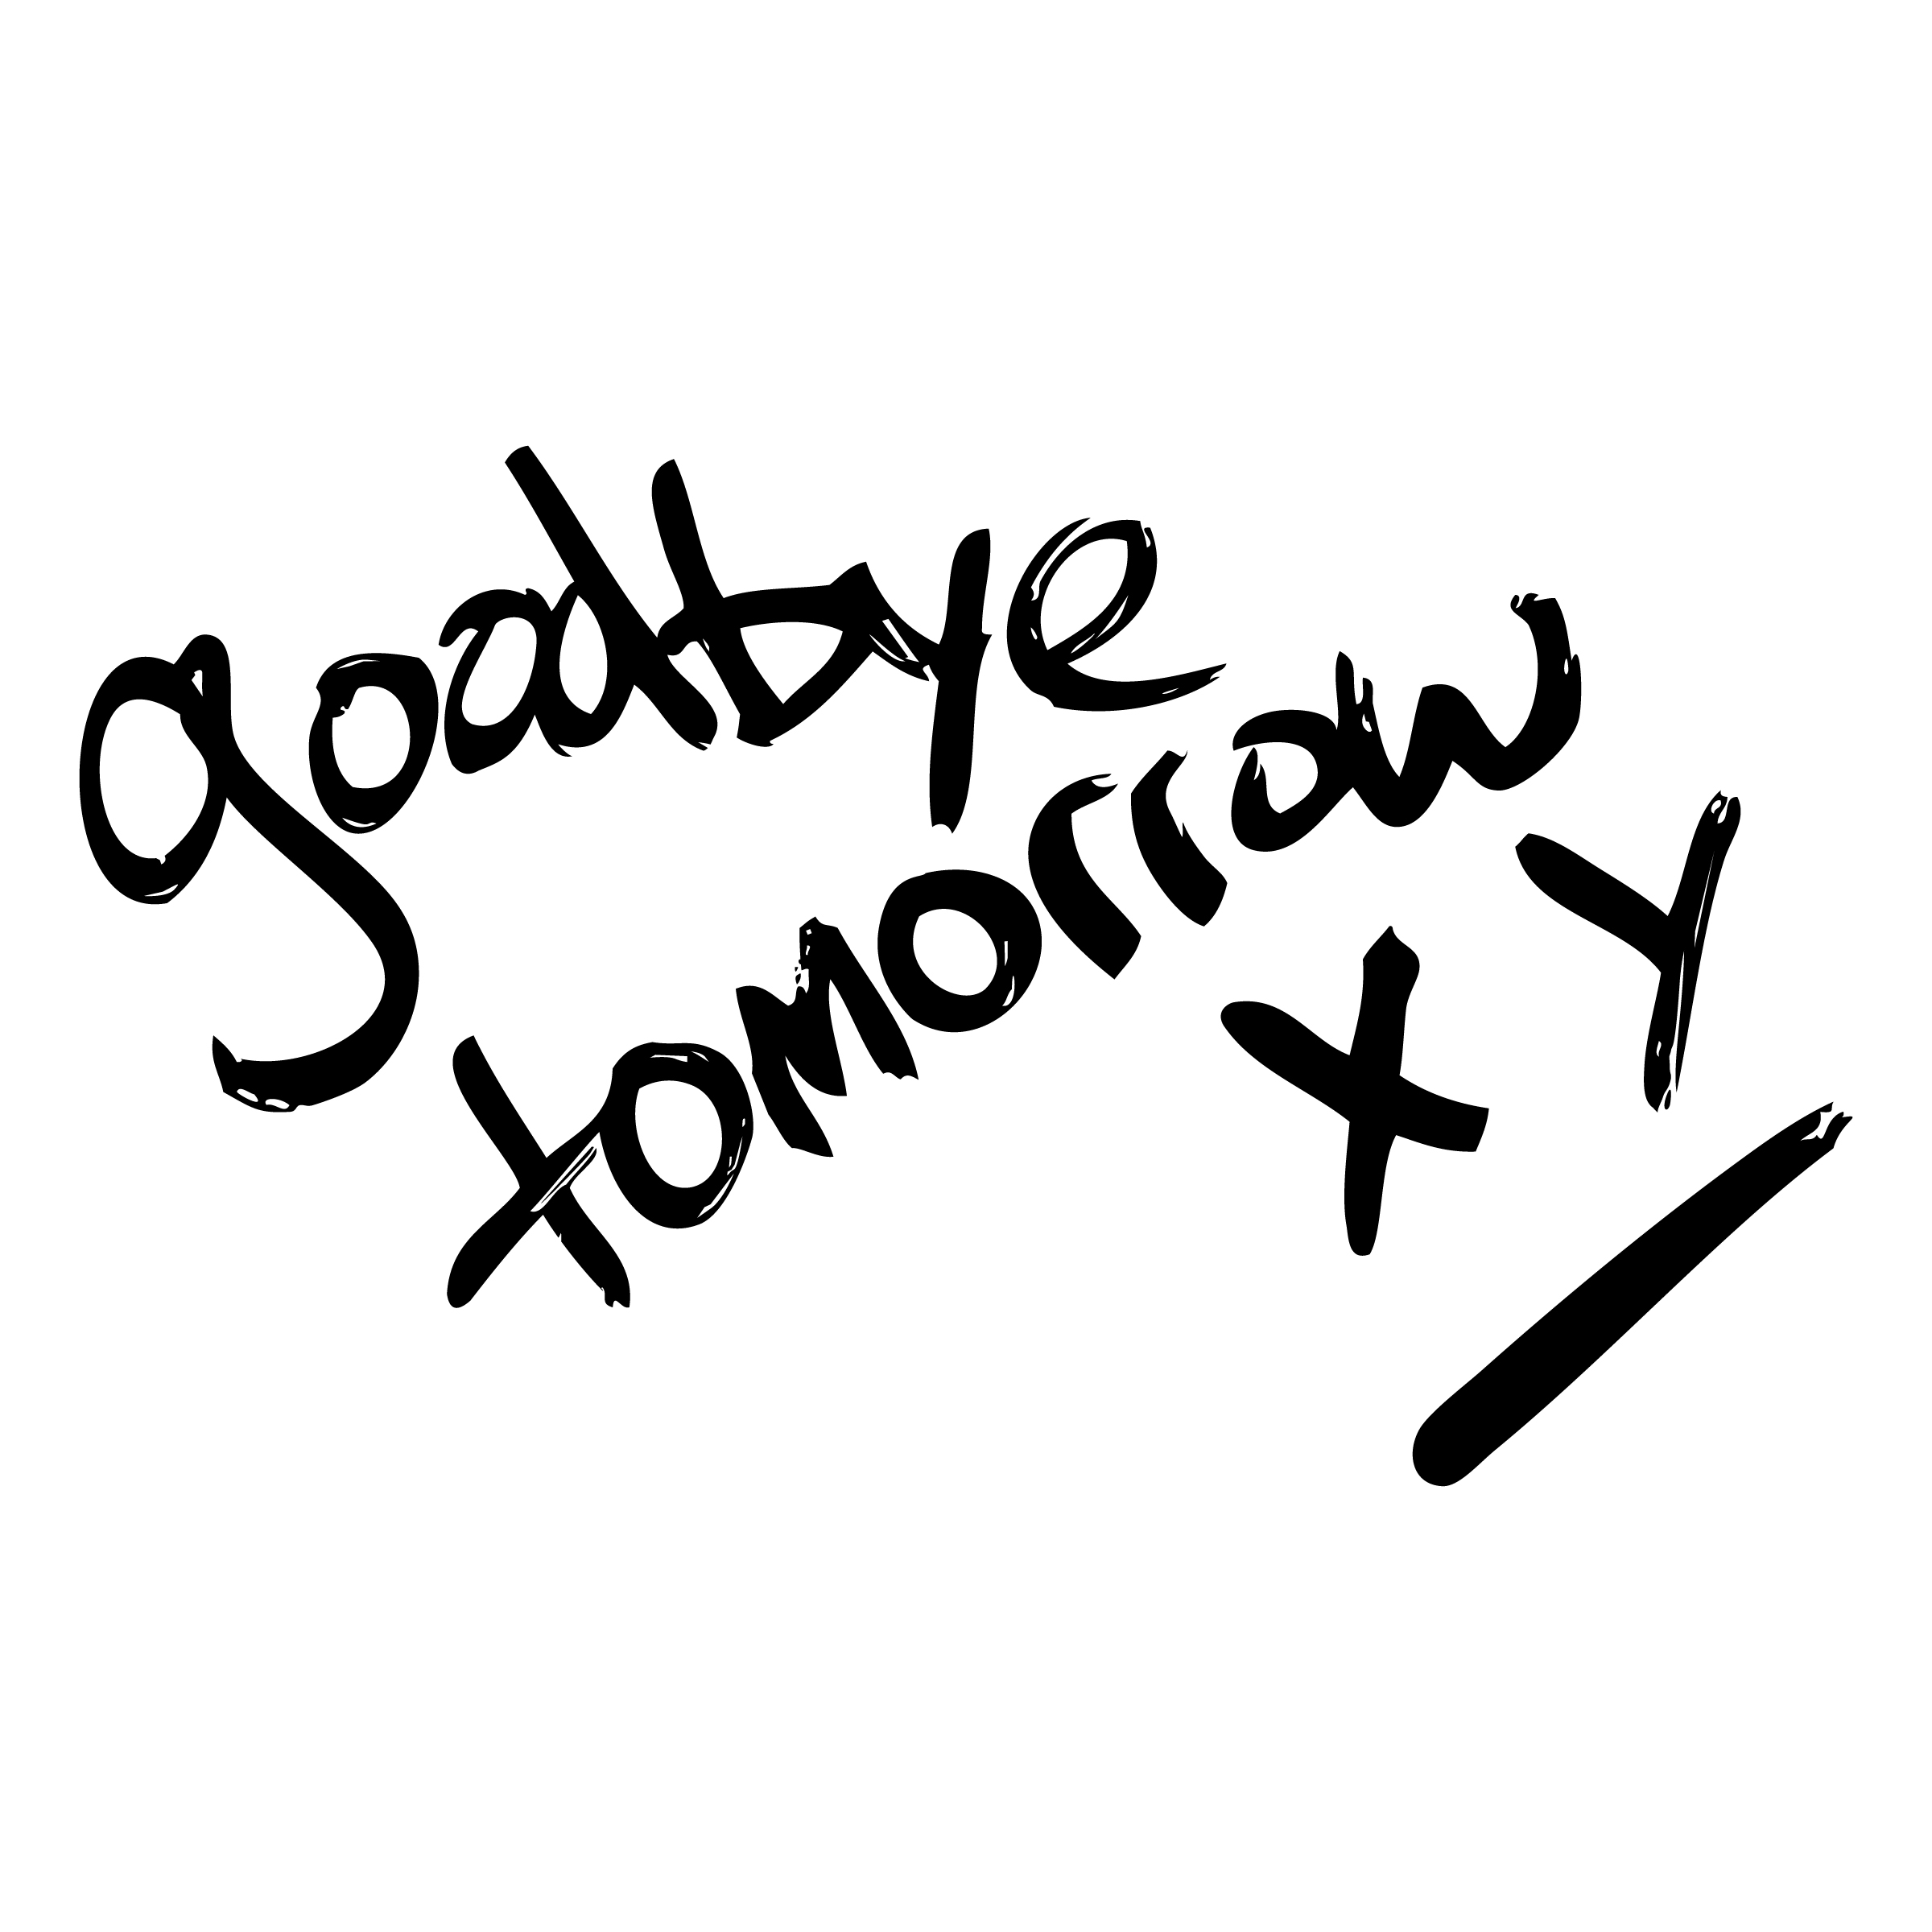 Goodbye Tomorrow - 100k